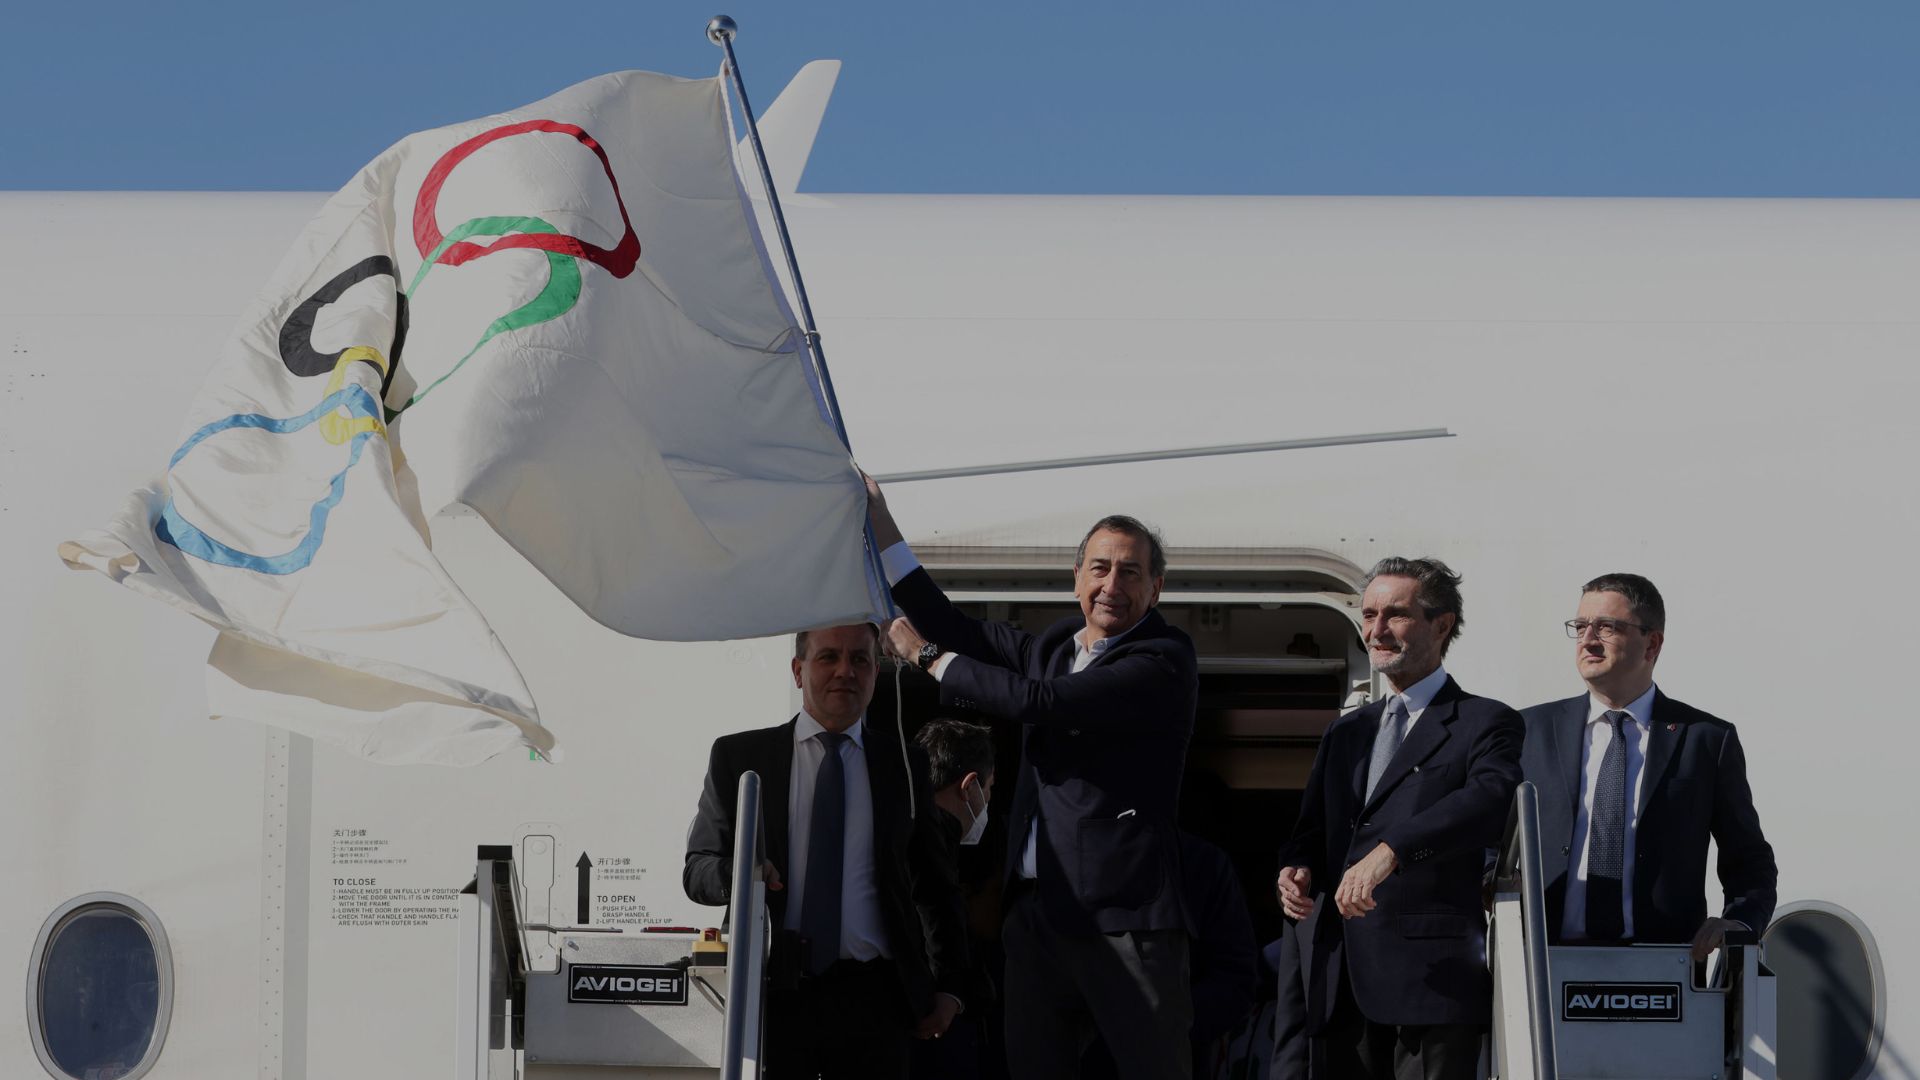 Olimpiadi: arrivo bandiera olimpica a Malpensa